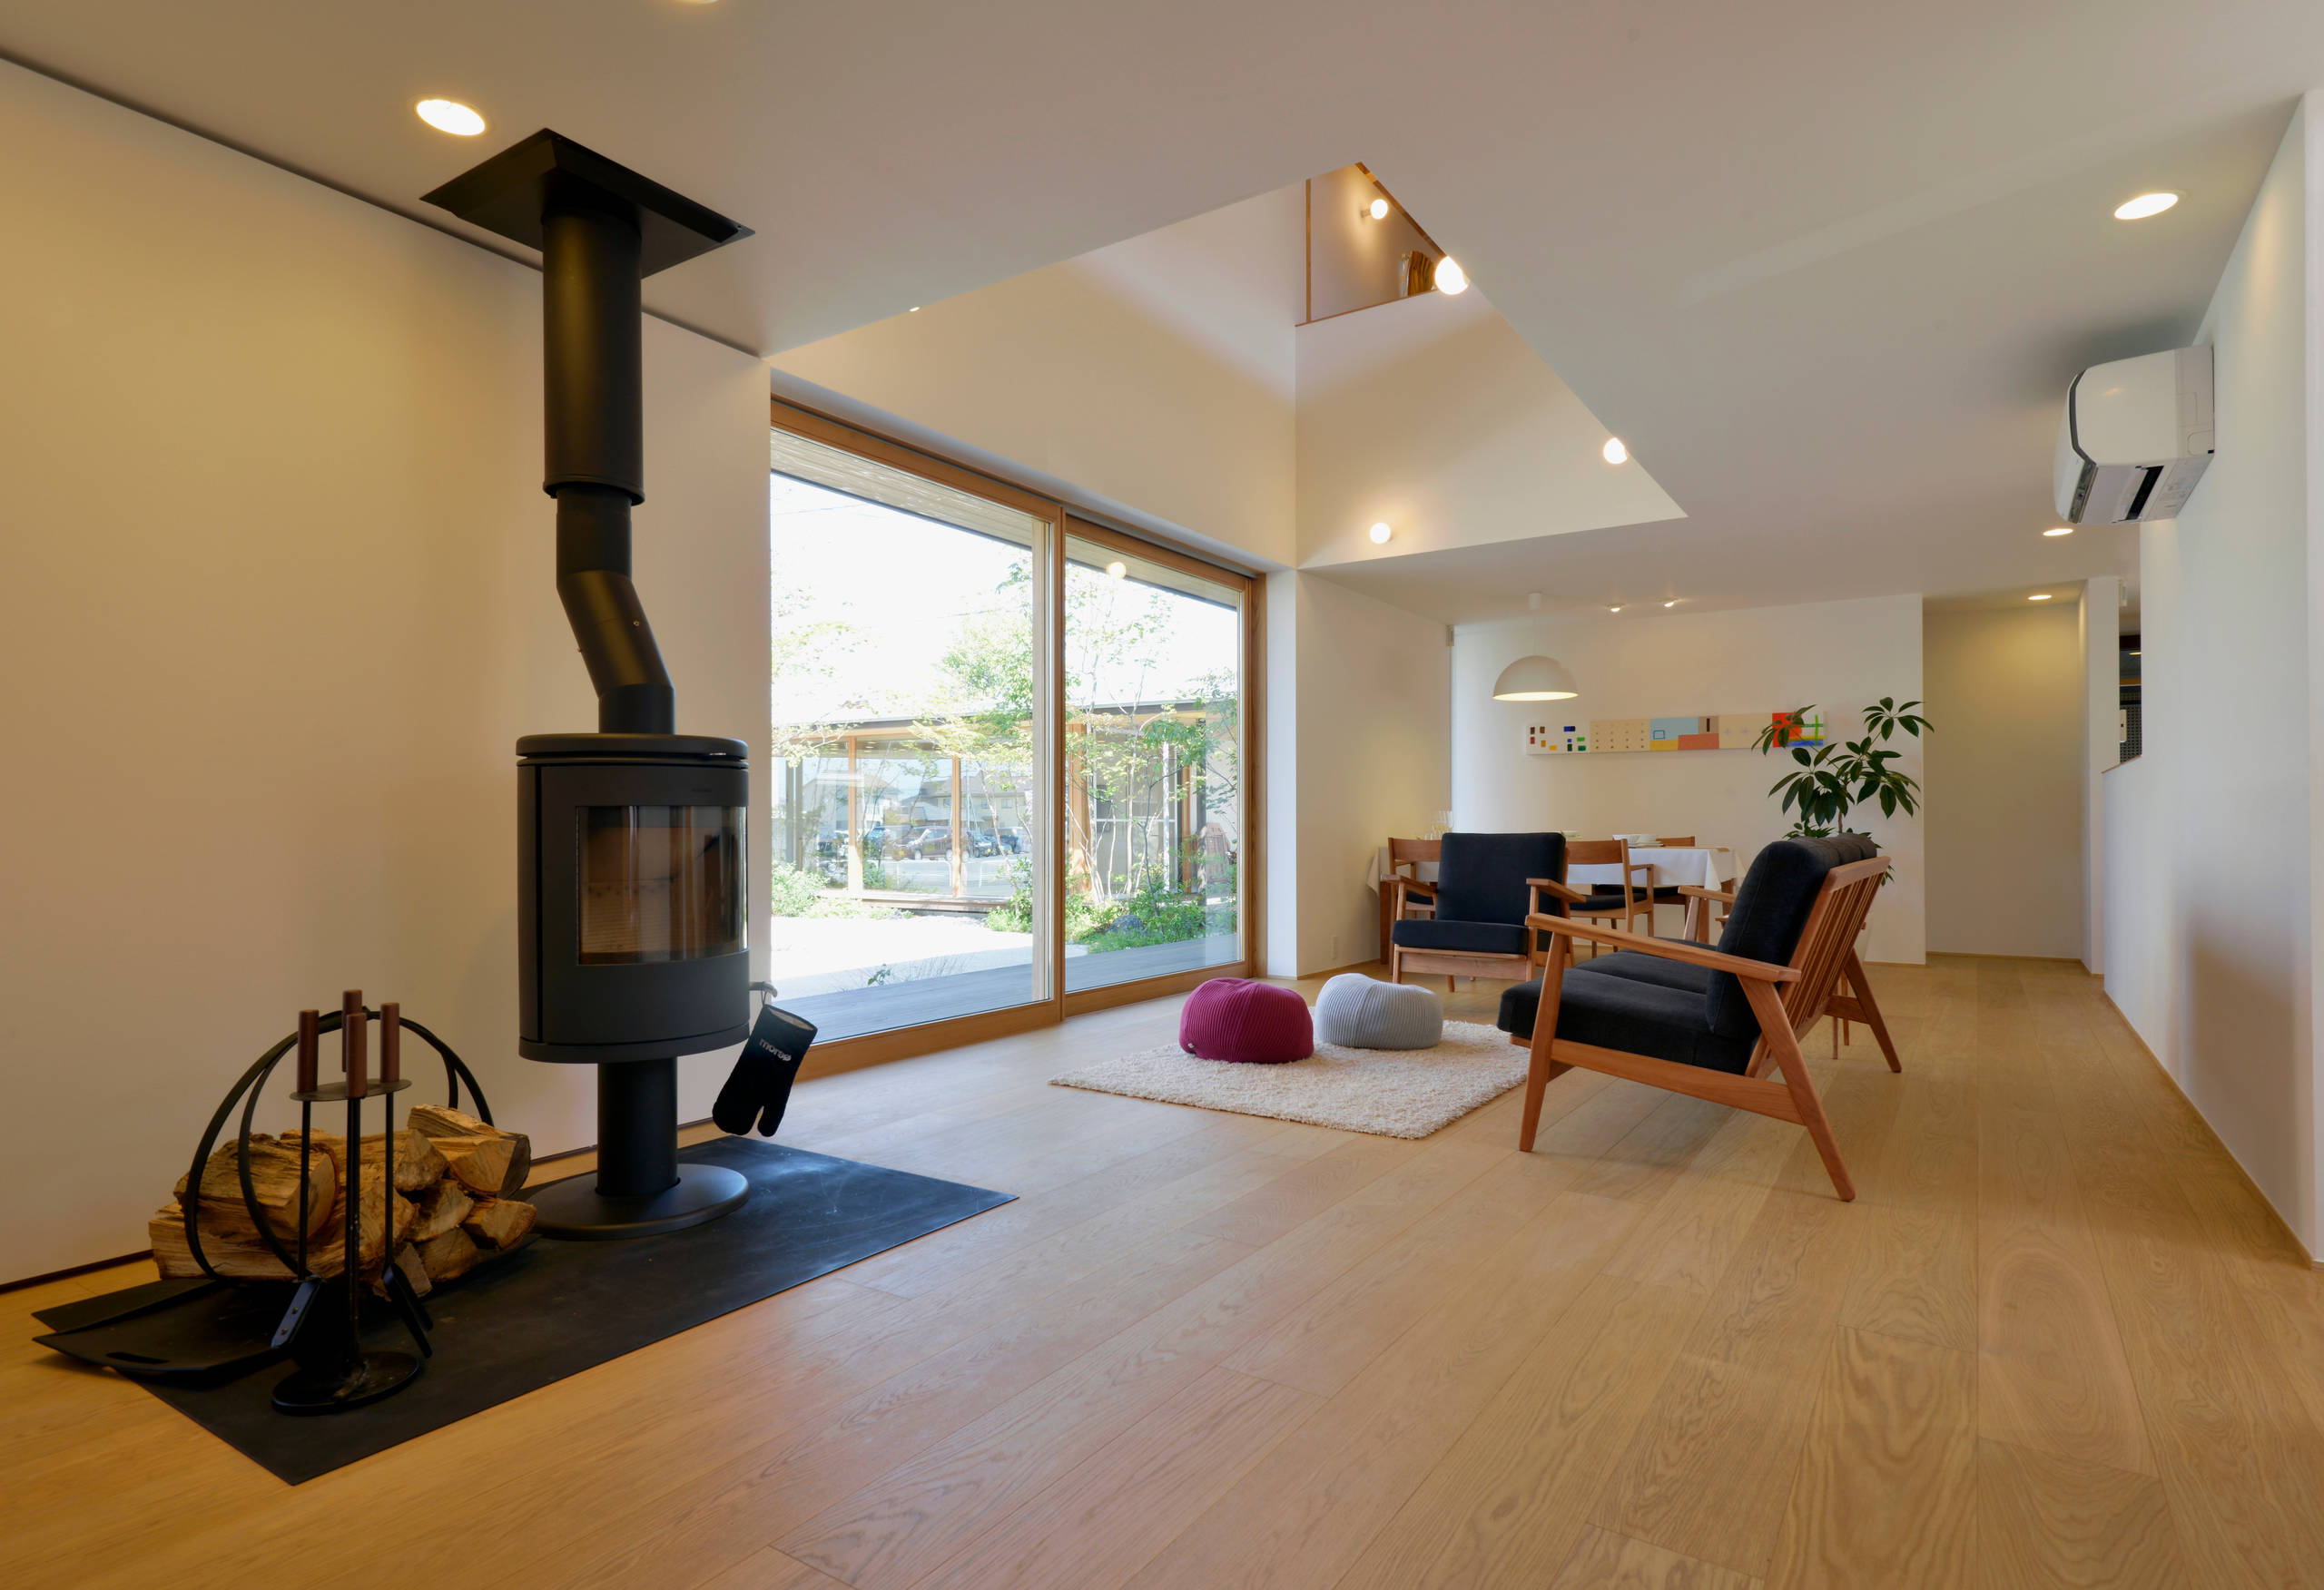 photos of modern living room designs